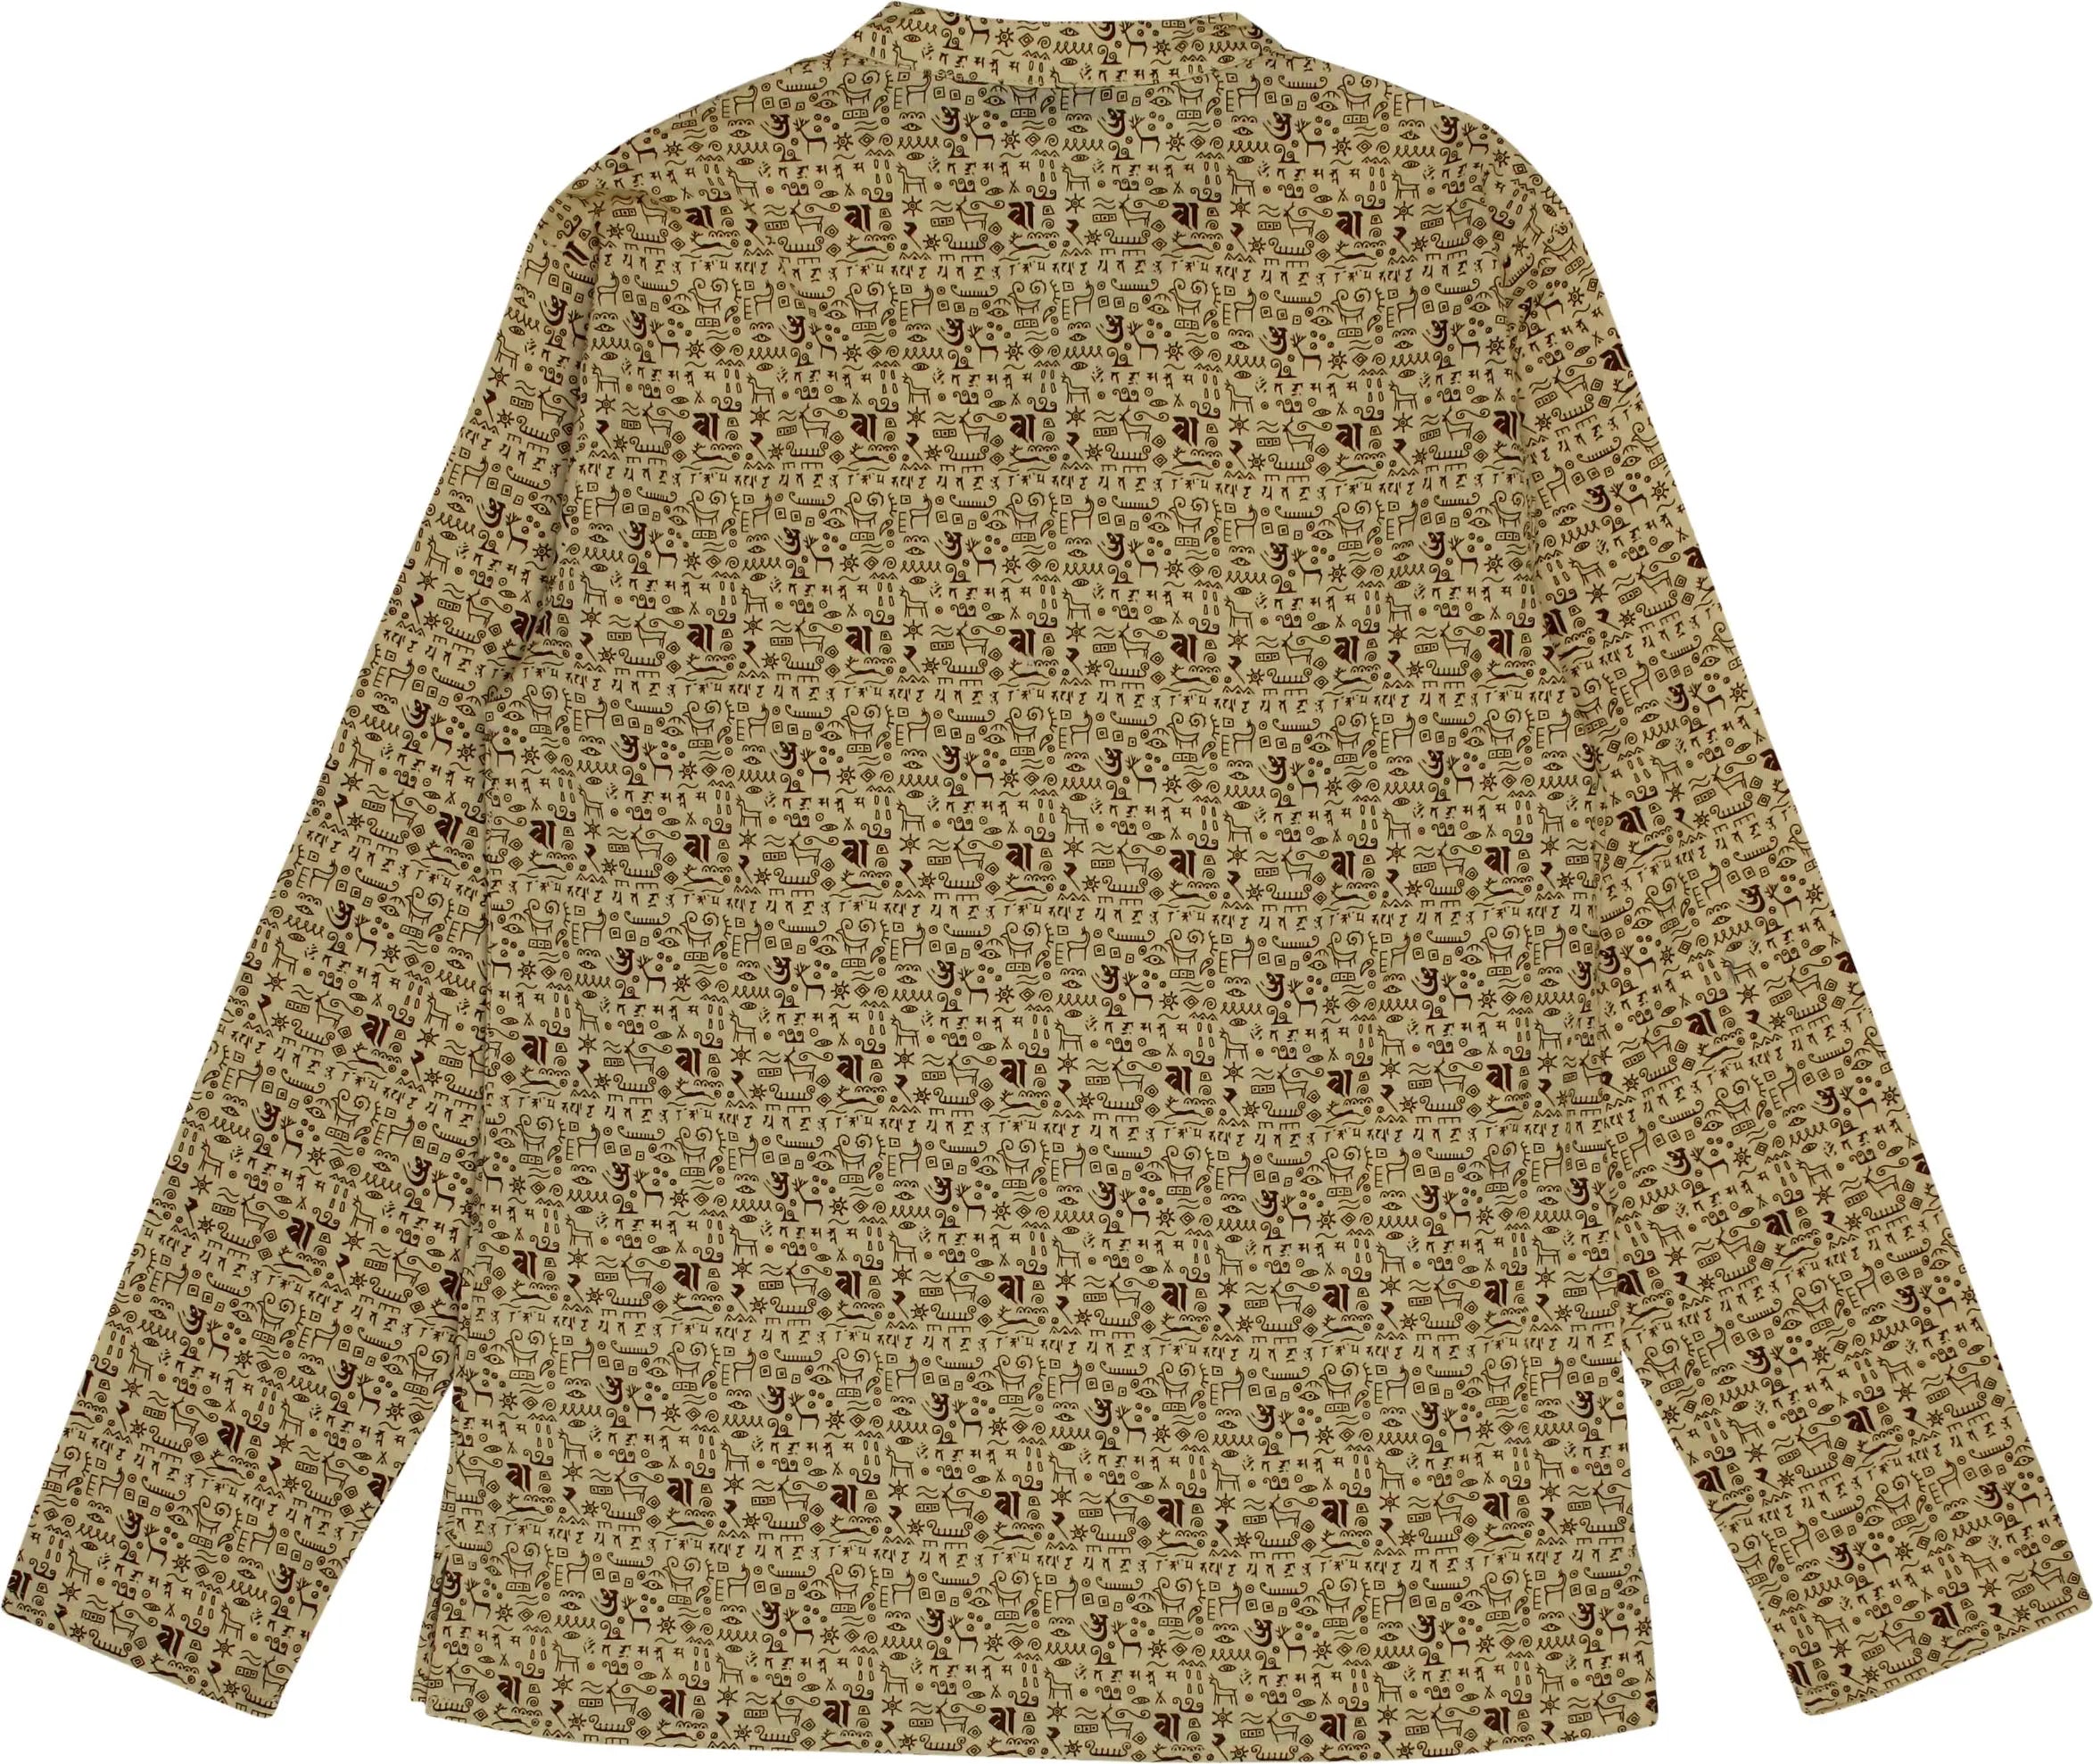 Shatranj - Patterned Kurta Shirt- ThriftTale.com - Vintage and second handclothing